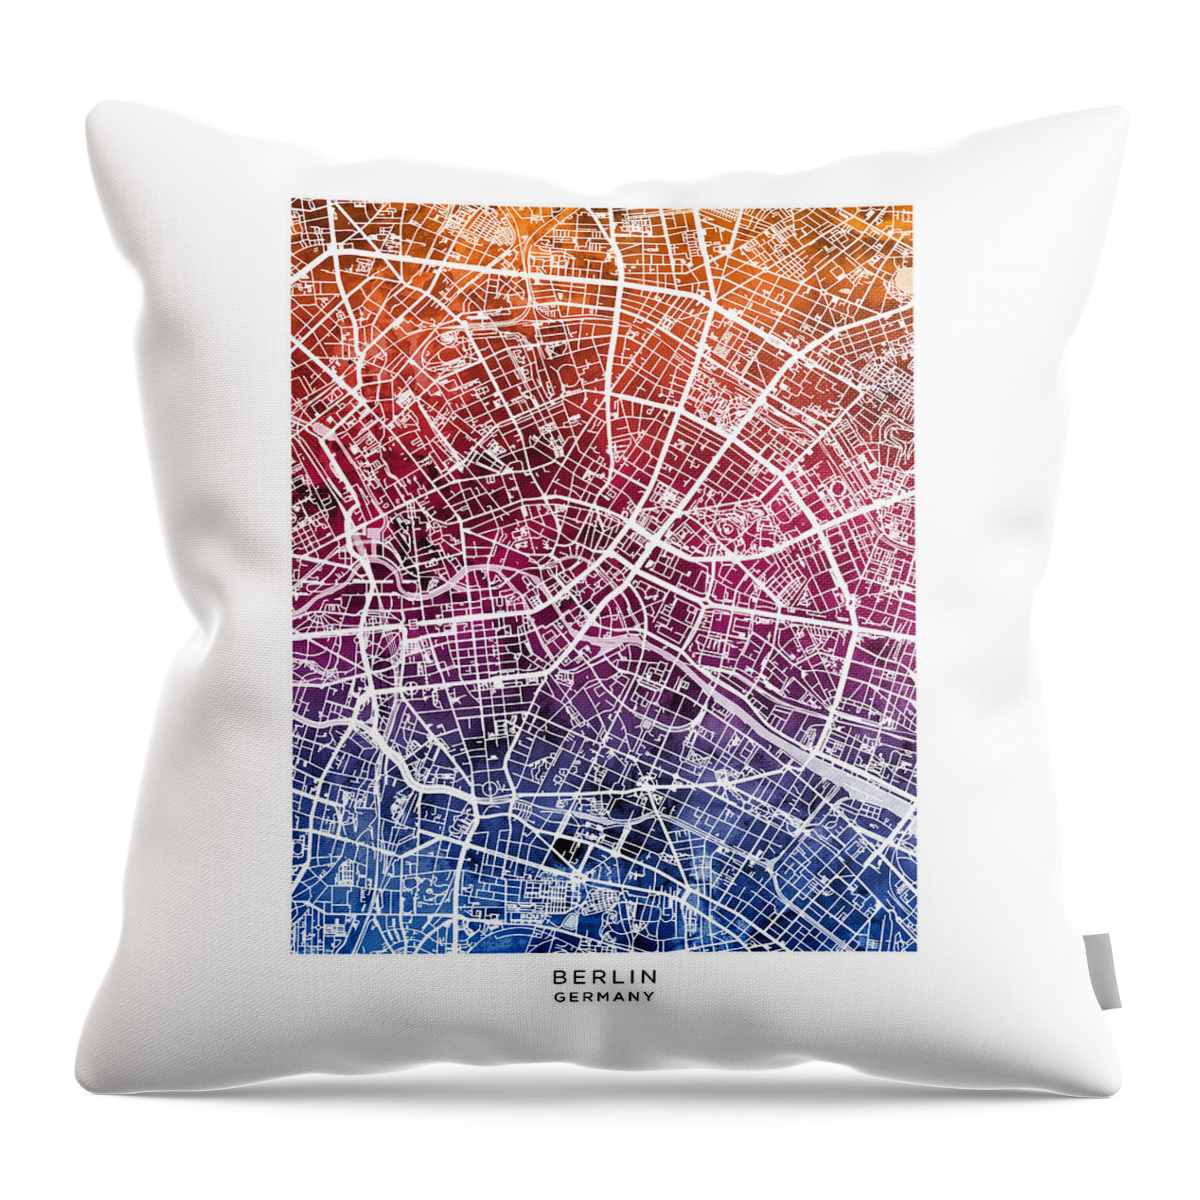 Berlin Throw Pillow featuring the digital art Berlin Germany City Map #53 by Michael Tompsett